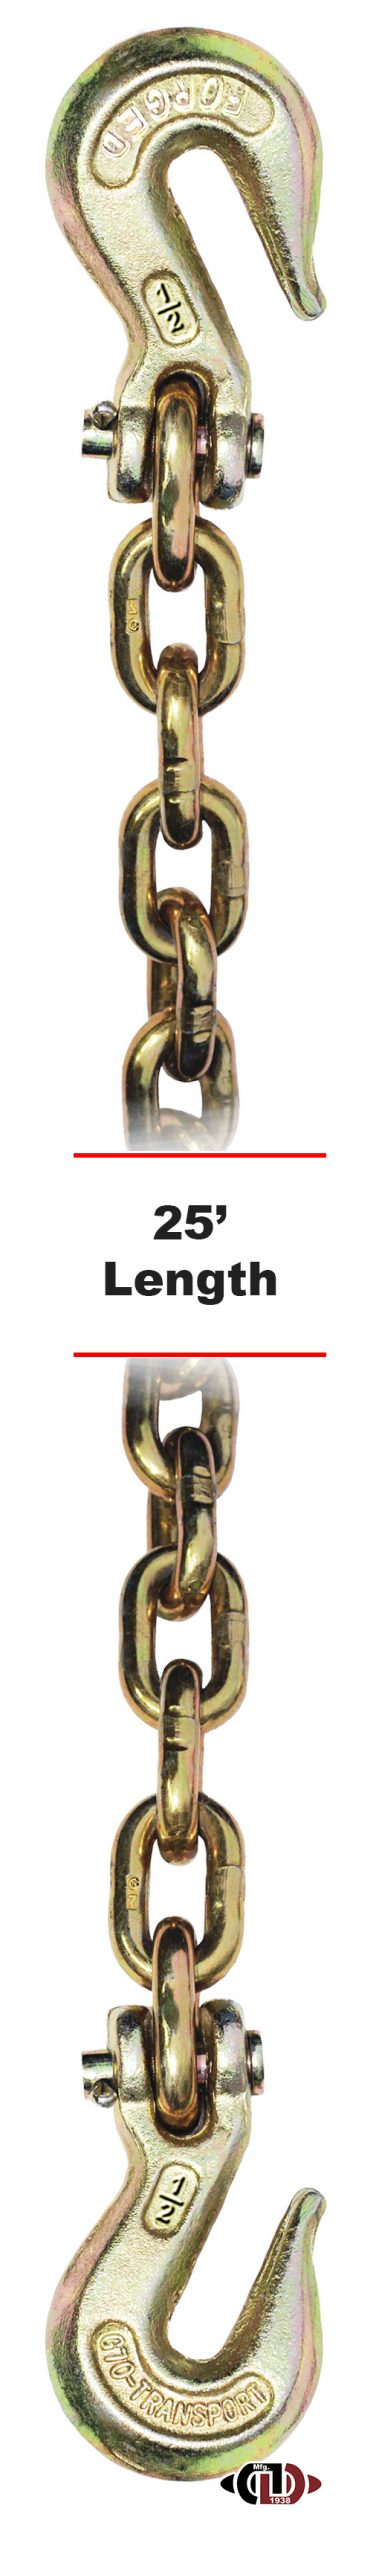 G-70 1/2" x 25' Chain w/ Clevis Grab Hooks on Both Ends DBC-12X25-G7-CGH (Copy)